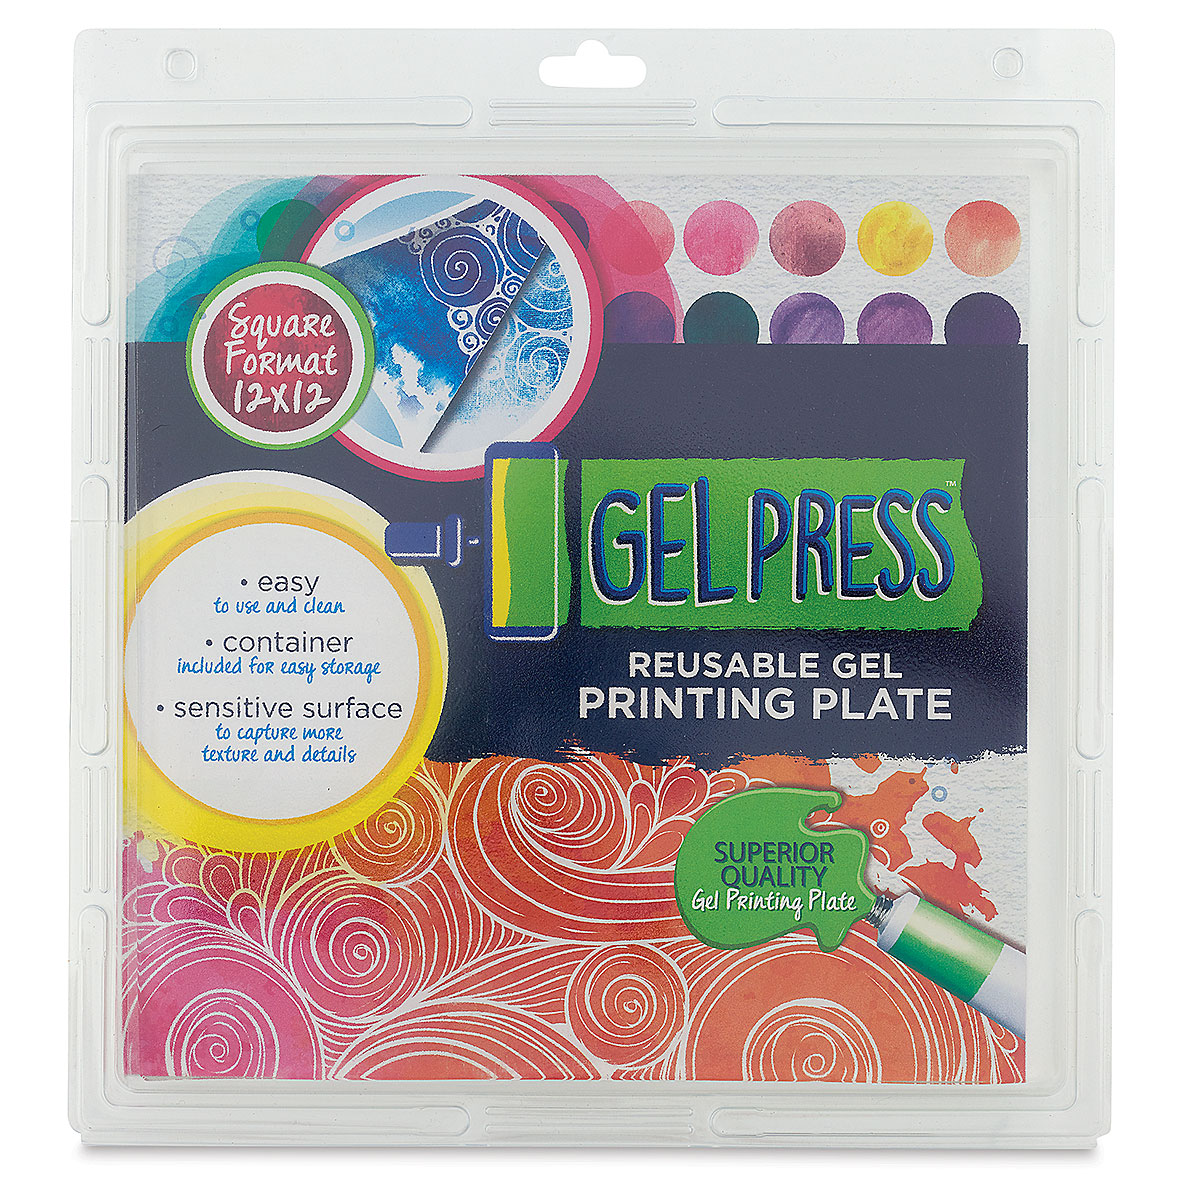 Gel Press Printing Plate - Square, 12 x 12